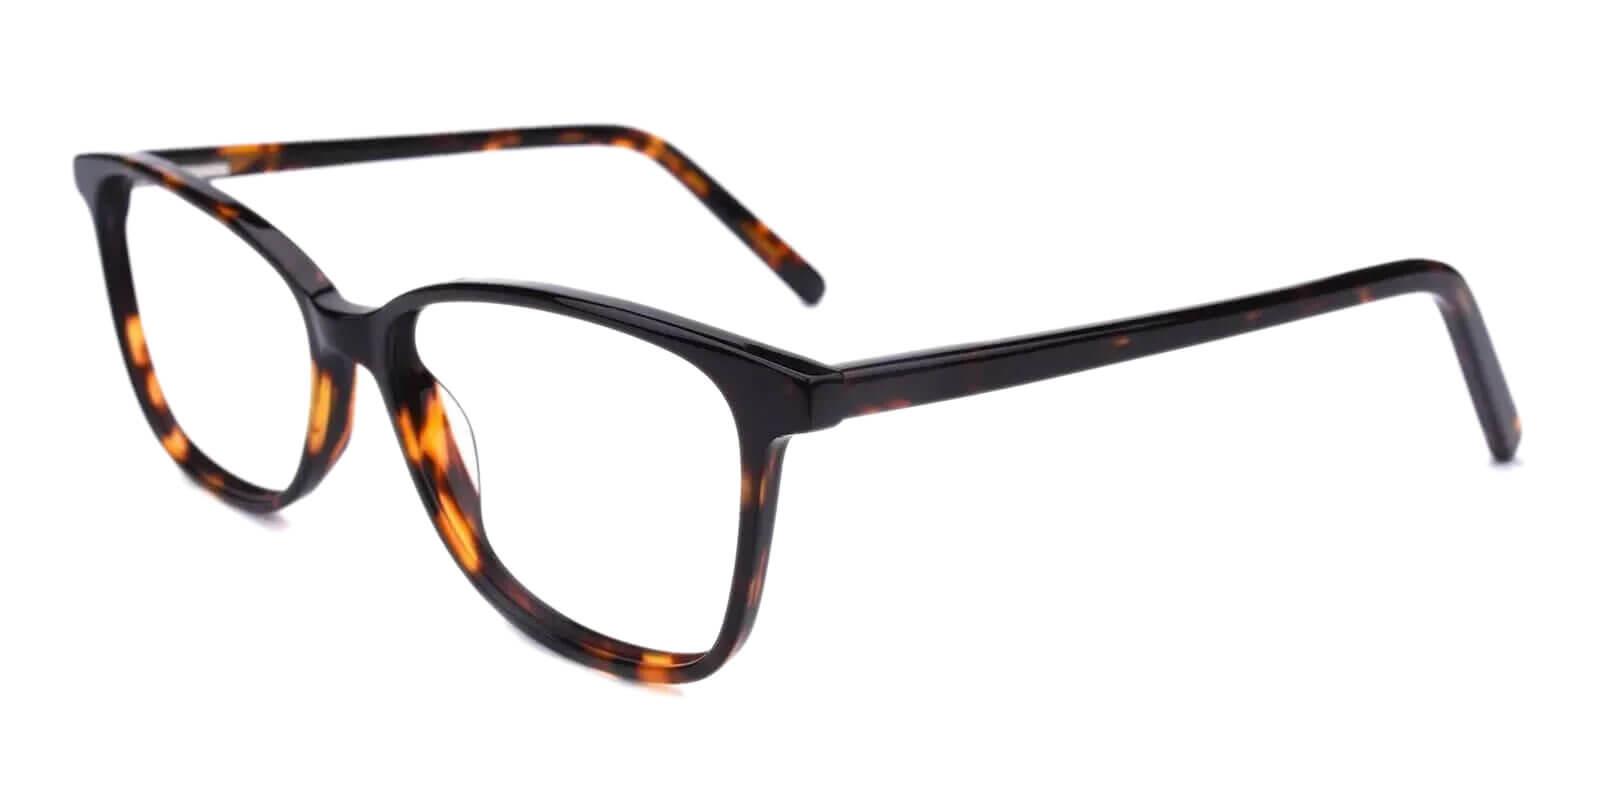 Belize Tortoise Acetate Eyeglasses , SpringHinges , UniversalBridgeFit Frames from ABBE Glasses